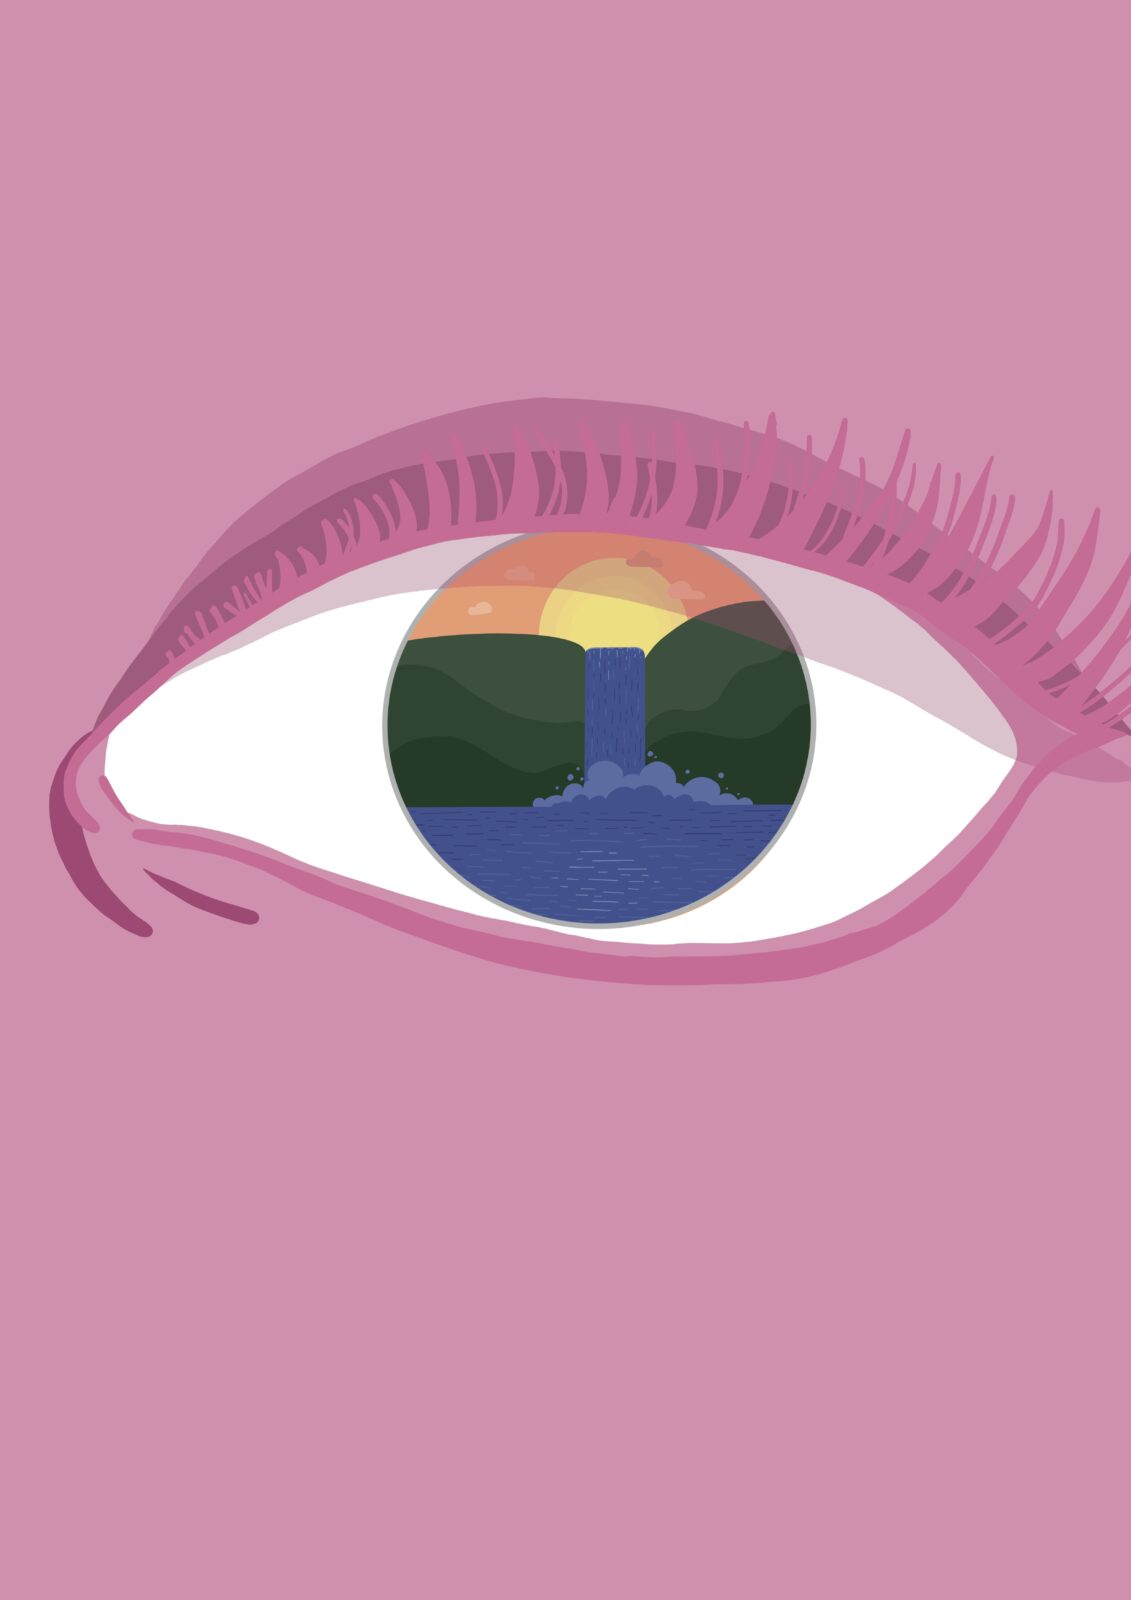 Illustration of a waterfall scene inside the iris of an eye.